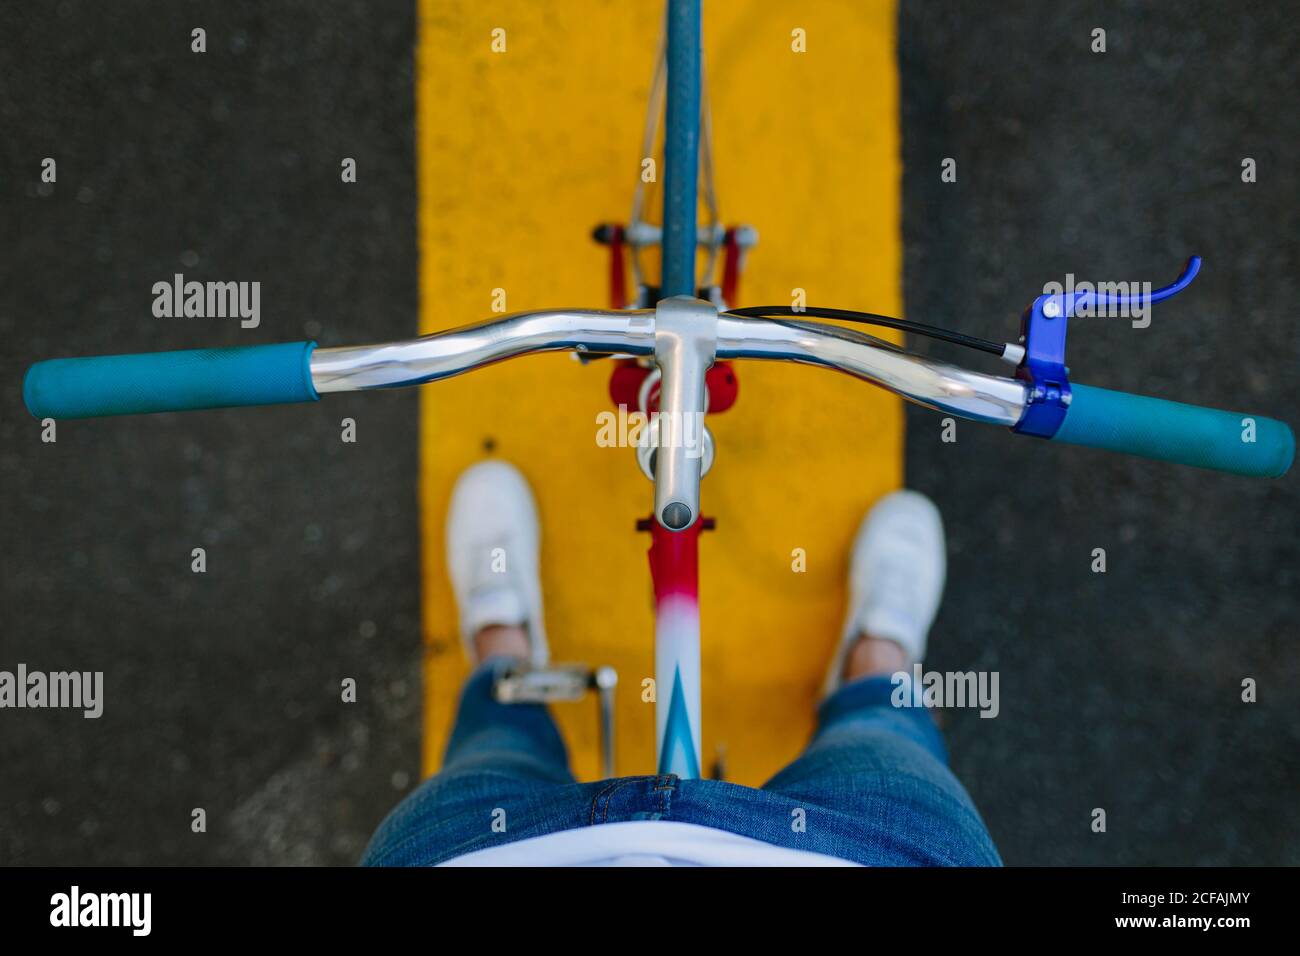 Top view of a fixie bike's handlebar over a crosswalk Stock Photo